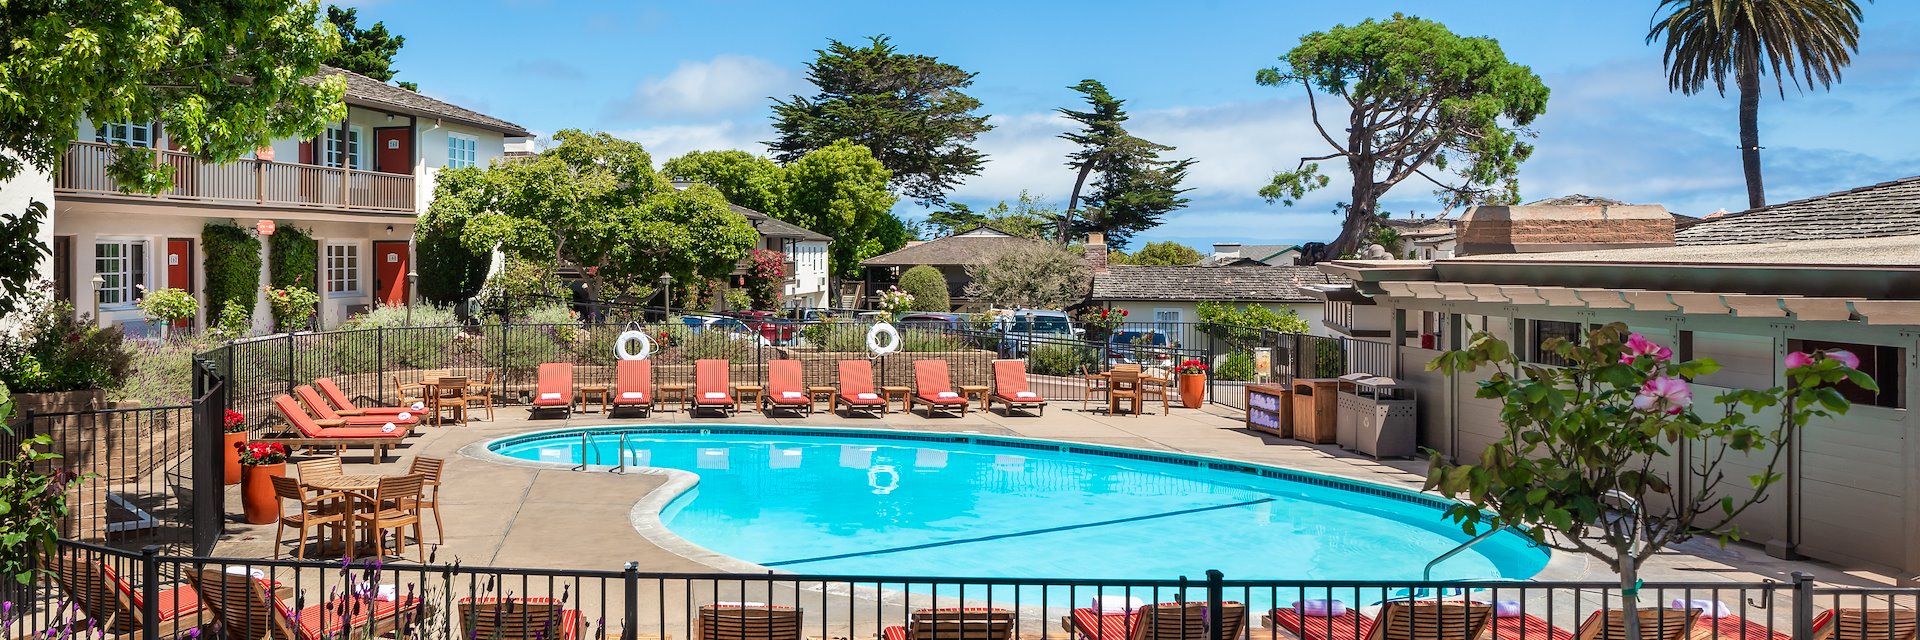 Casa Munras Garden Hotel & Spa, Monterey History